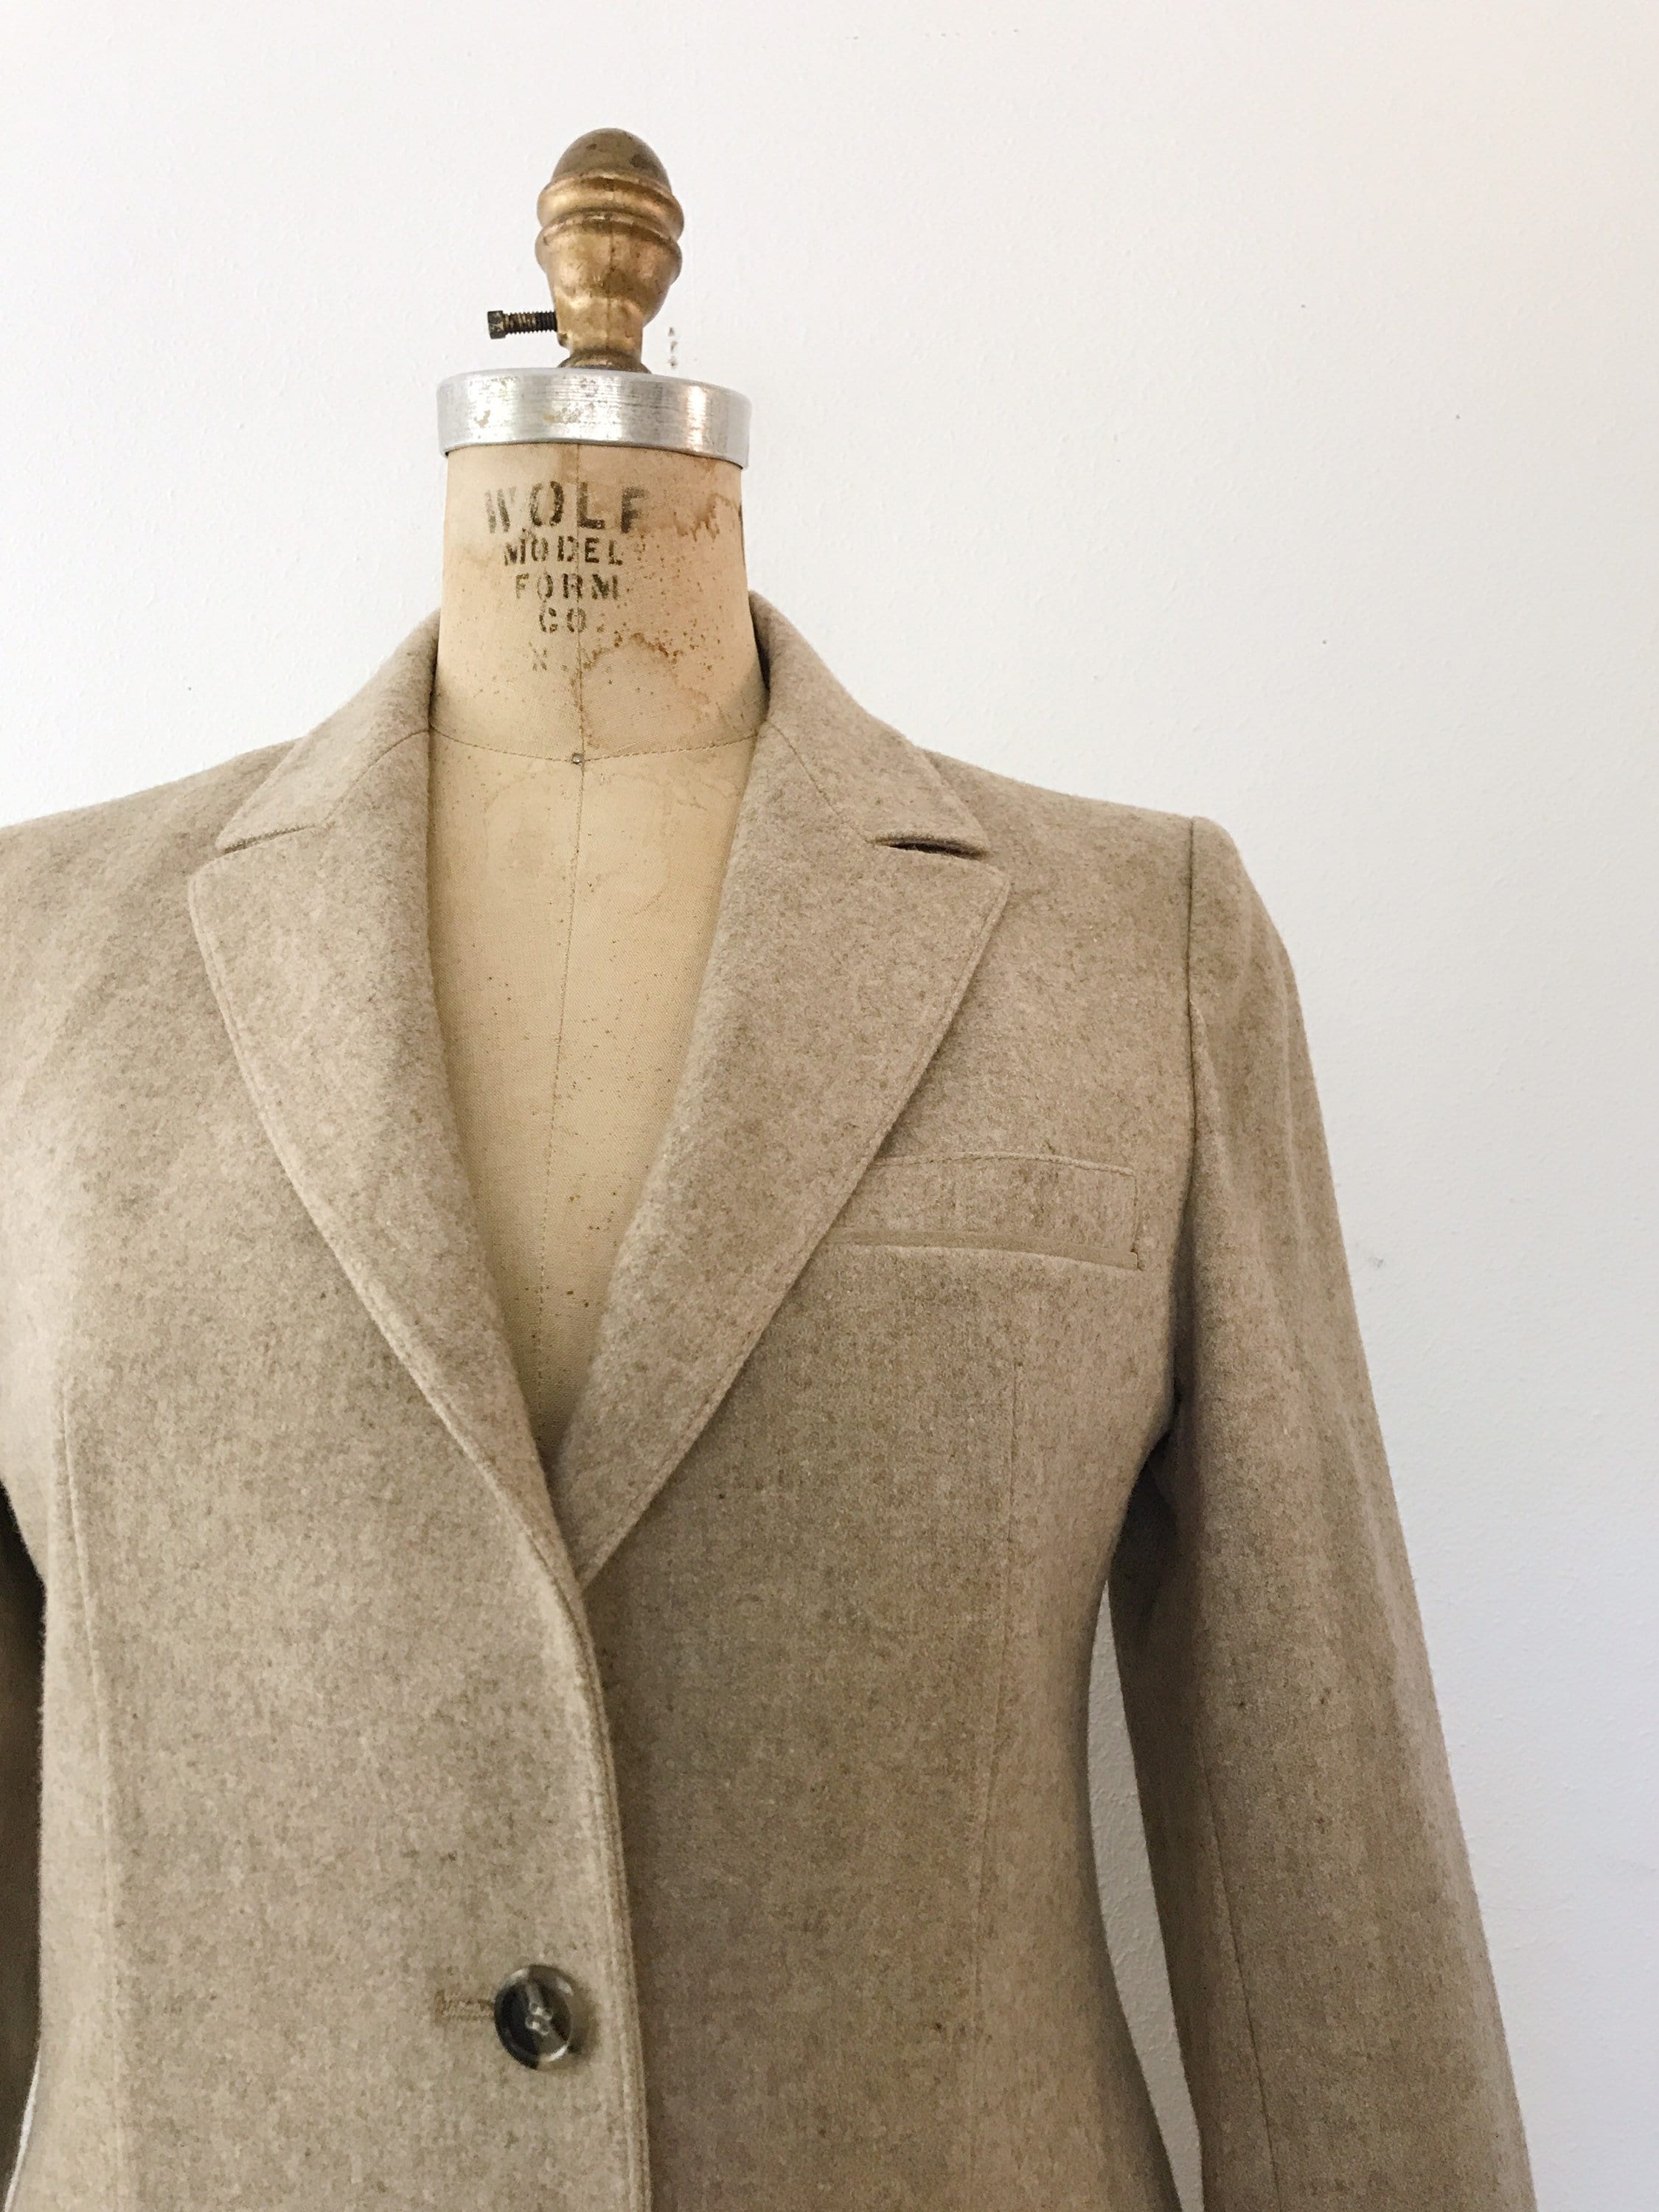 Wool Blazer / vintage tailored jacket / Well Appointed Blazer